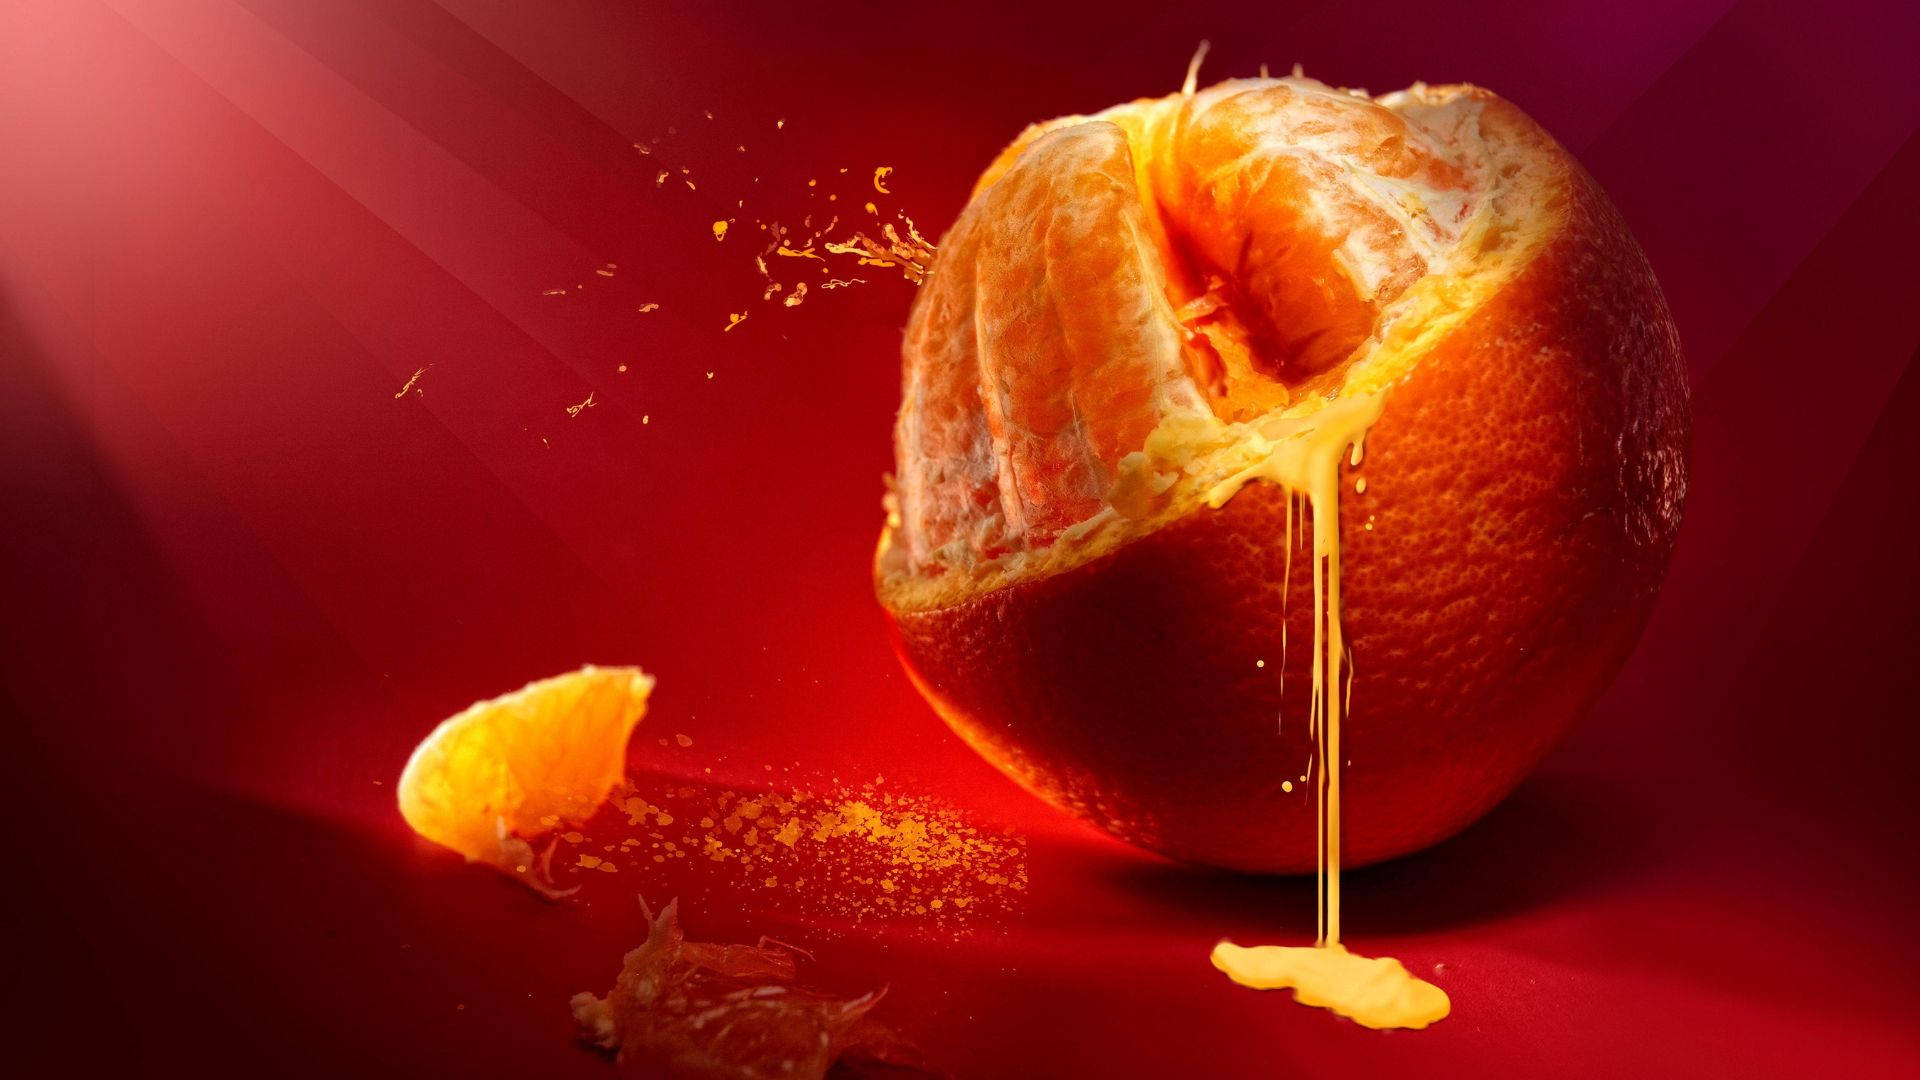 Dripping Orange Fruit Background